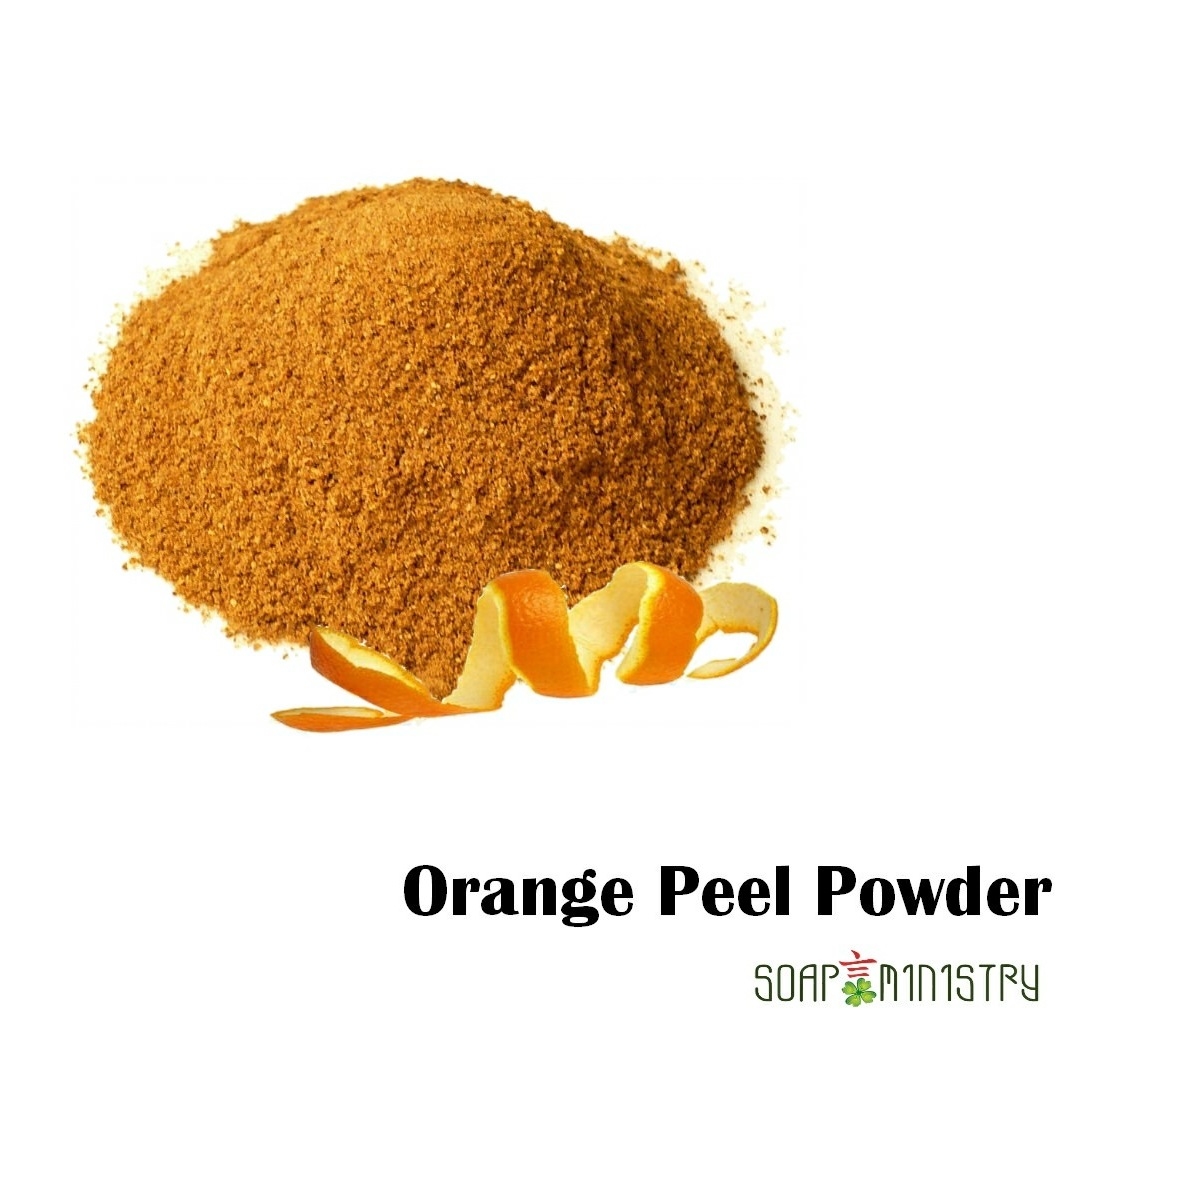 Orange Peel Powder 250g